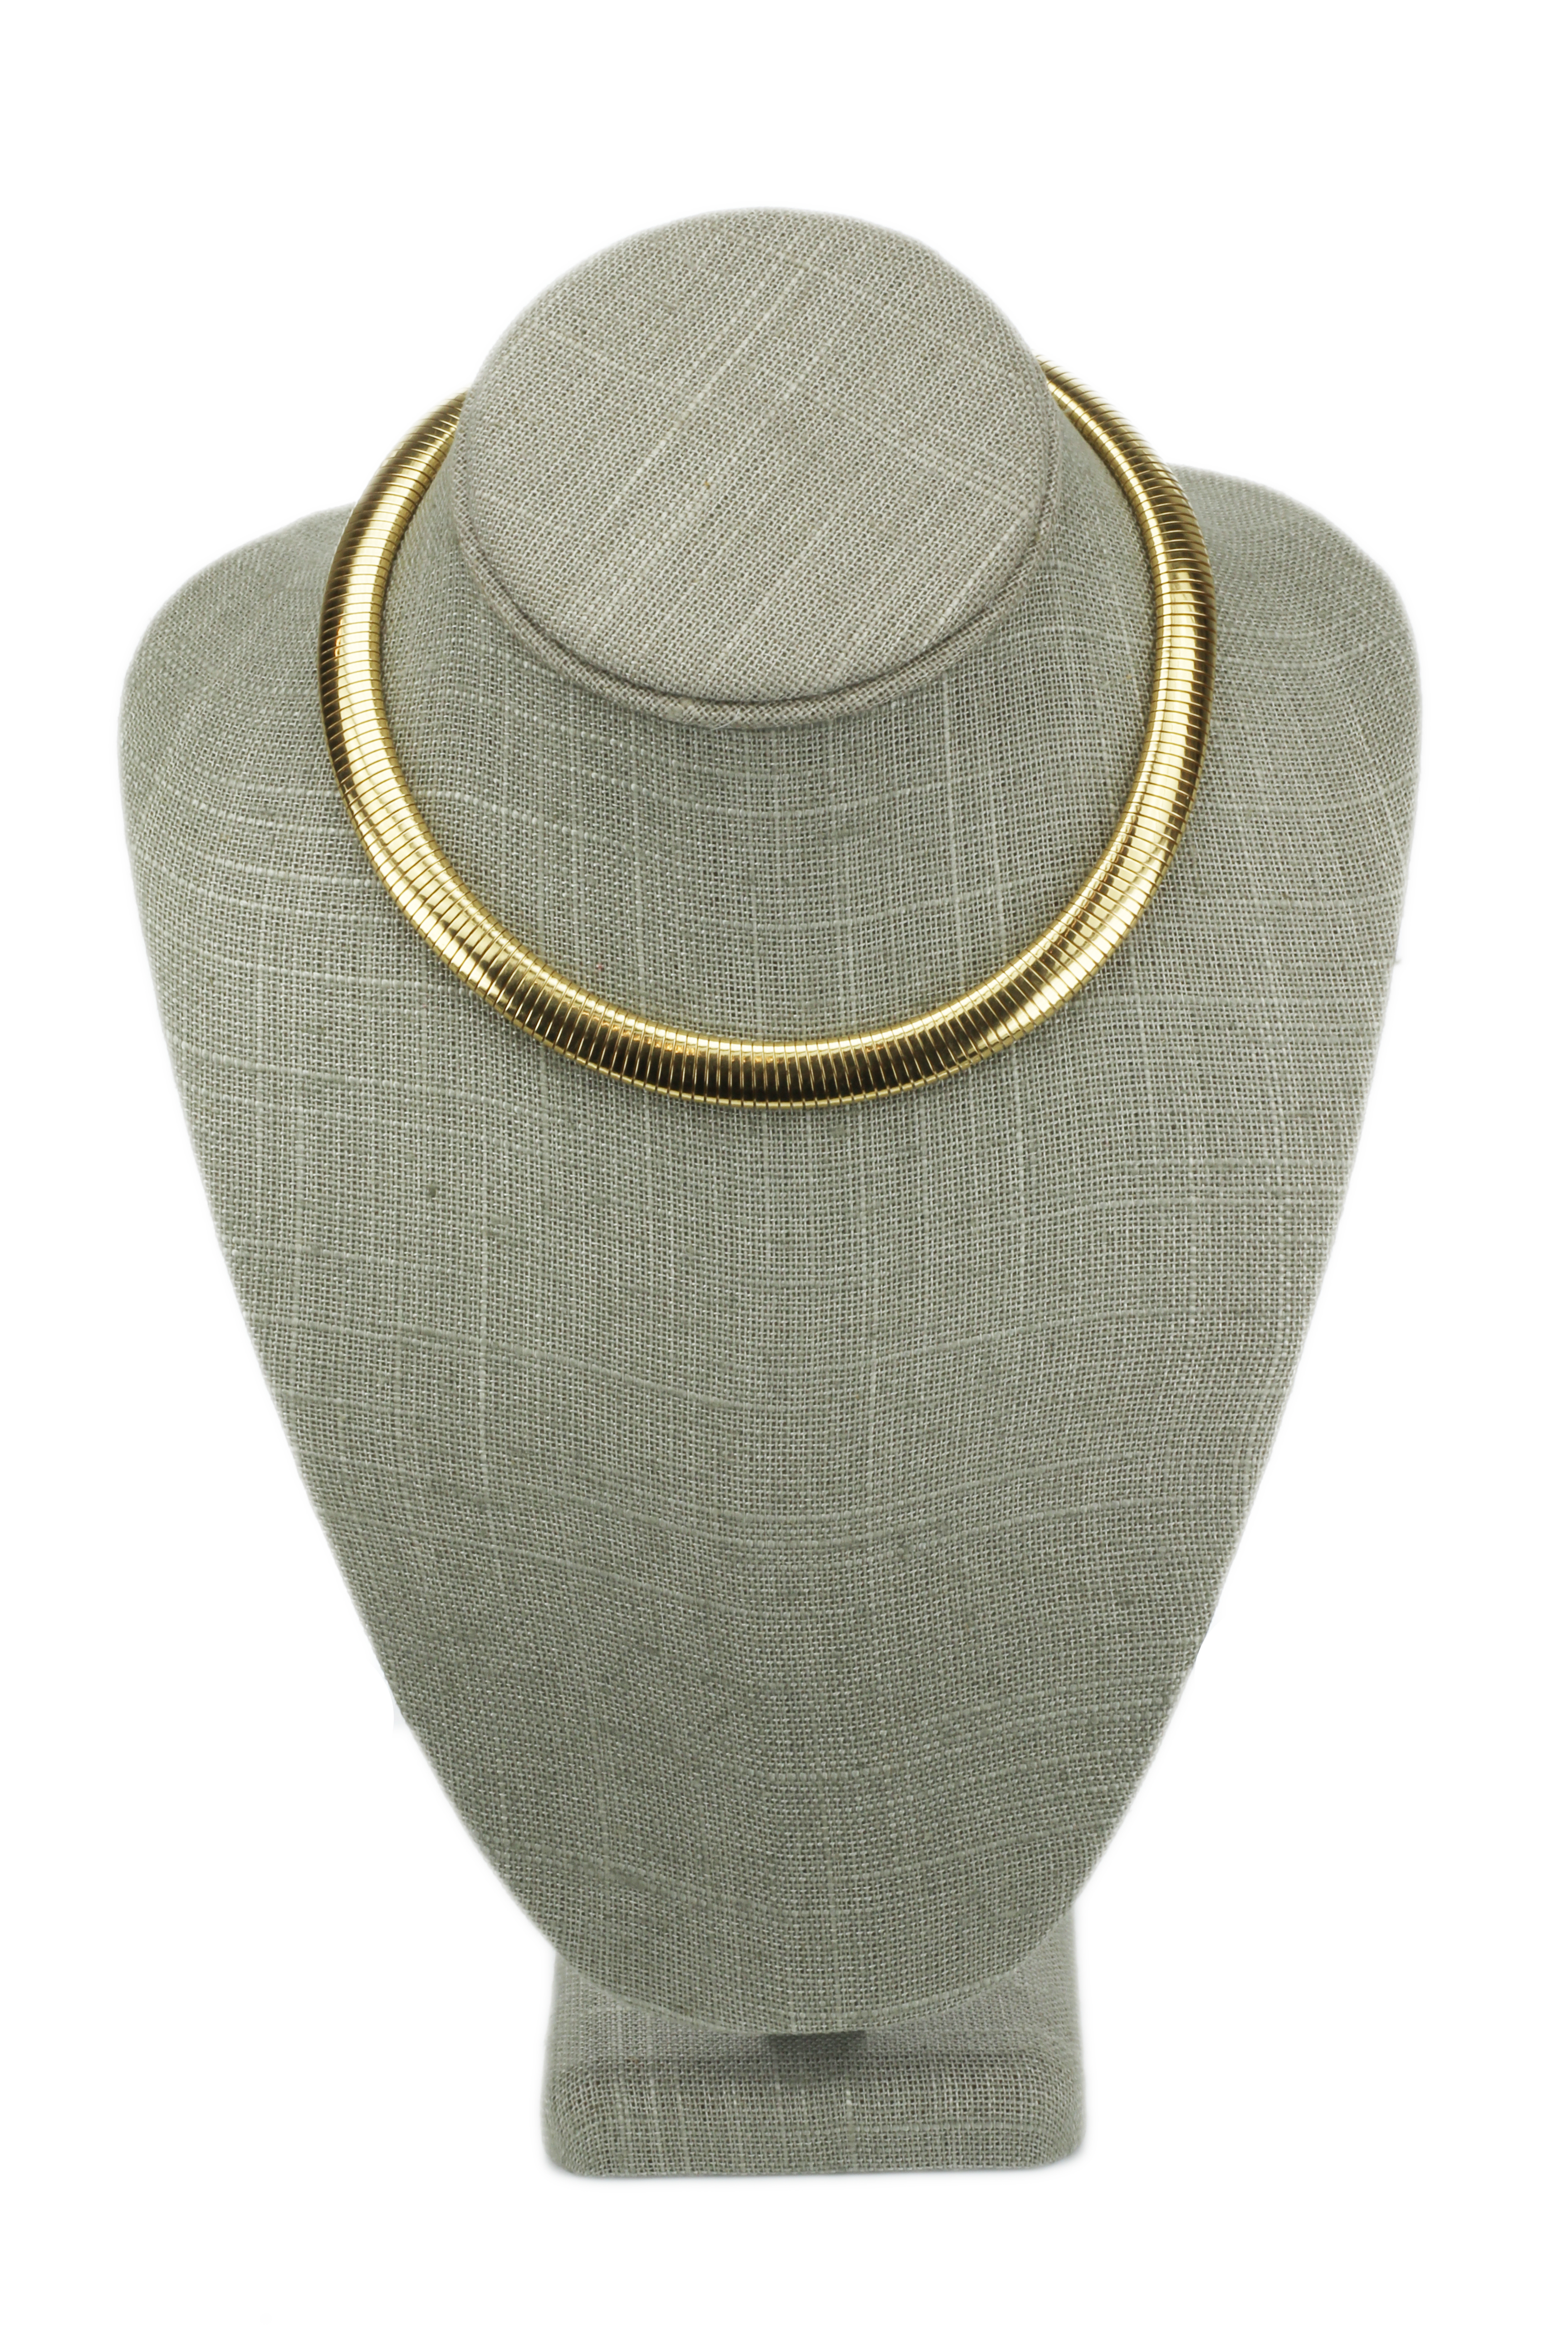 gold omega necklace